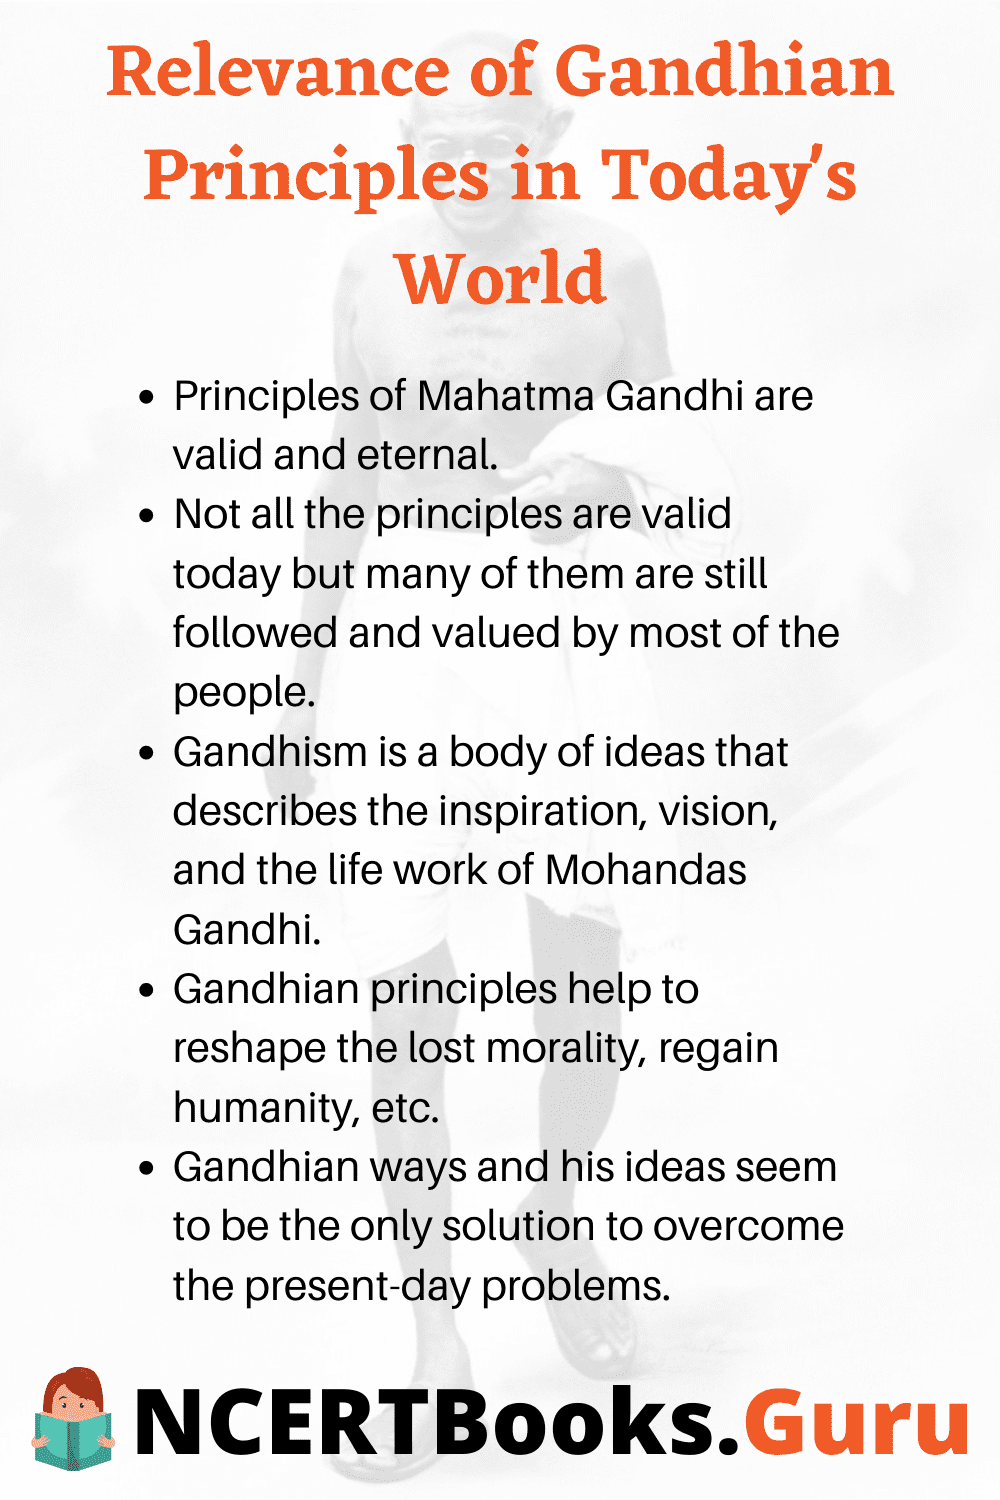 Essay on Relevance of Gandhian Principles in Today’s World